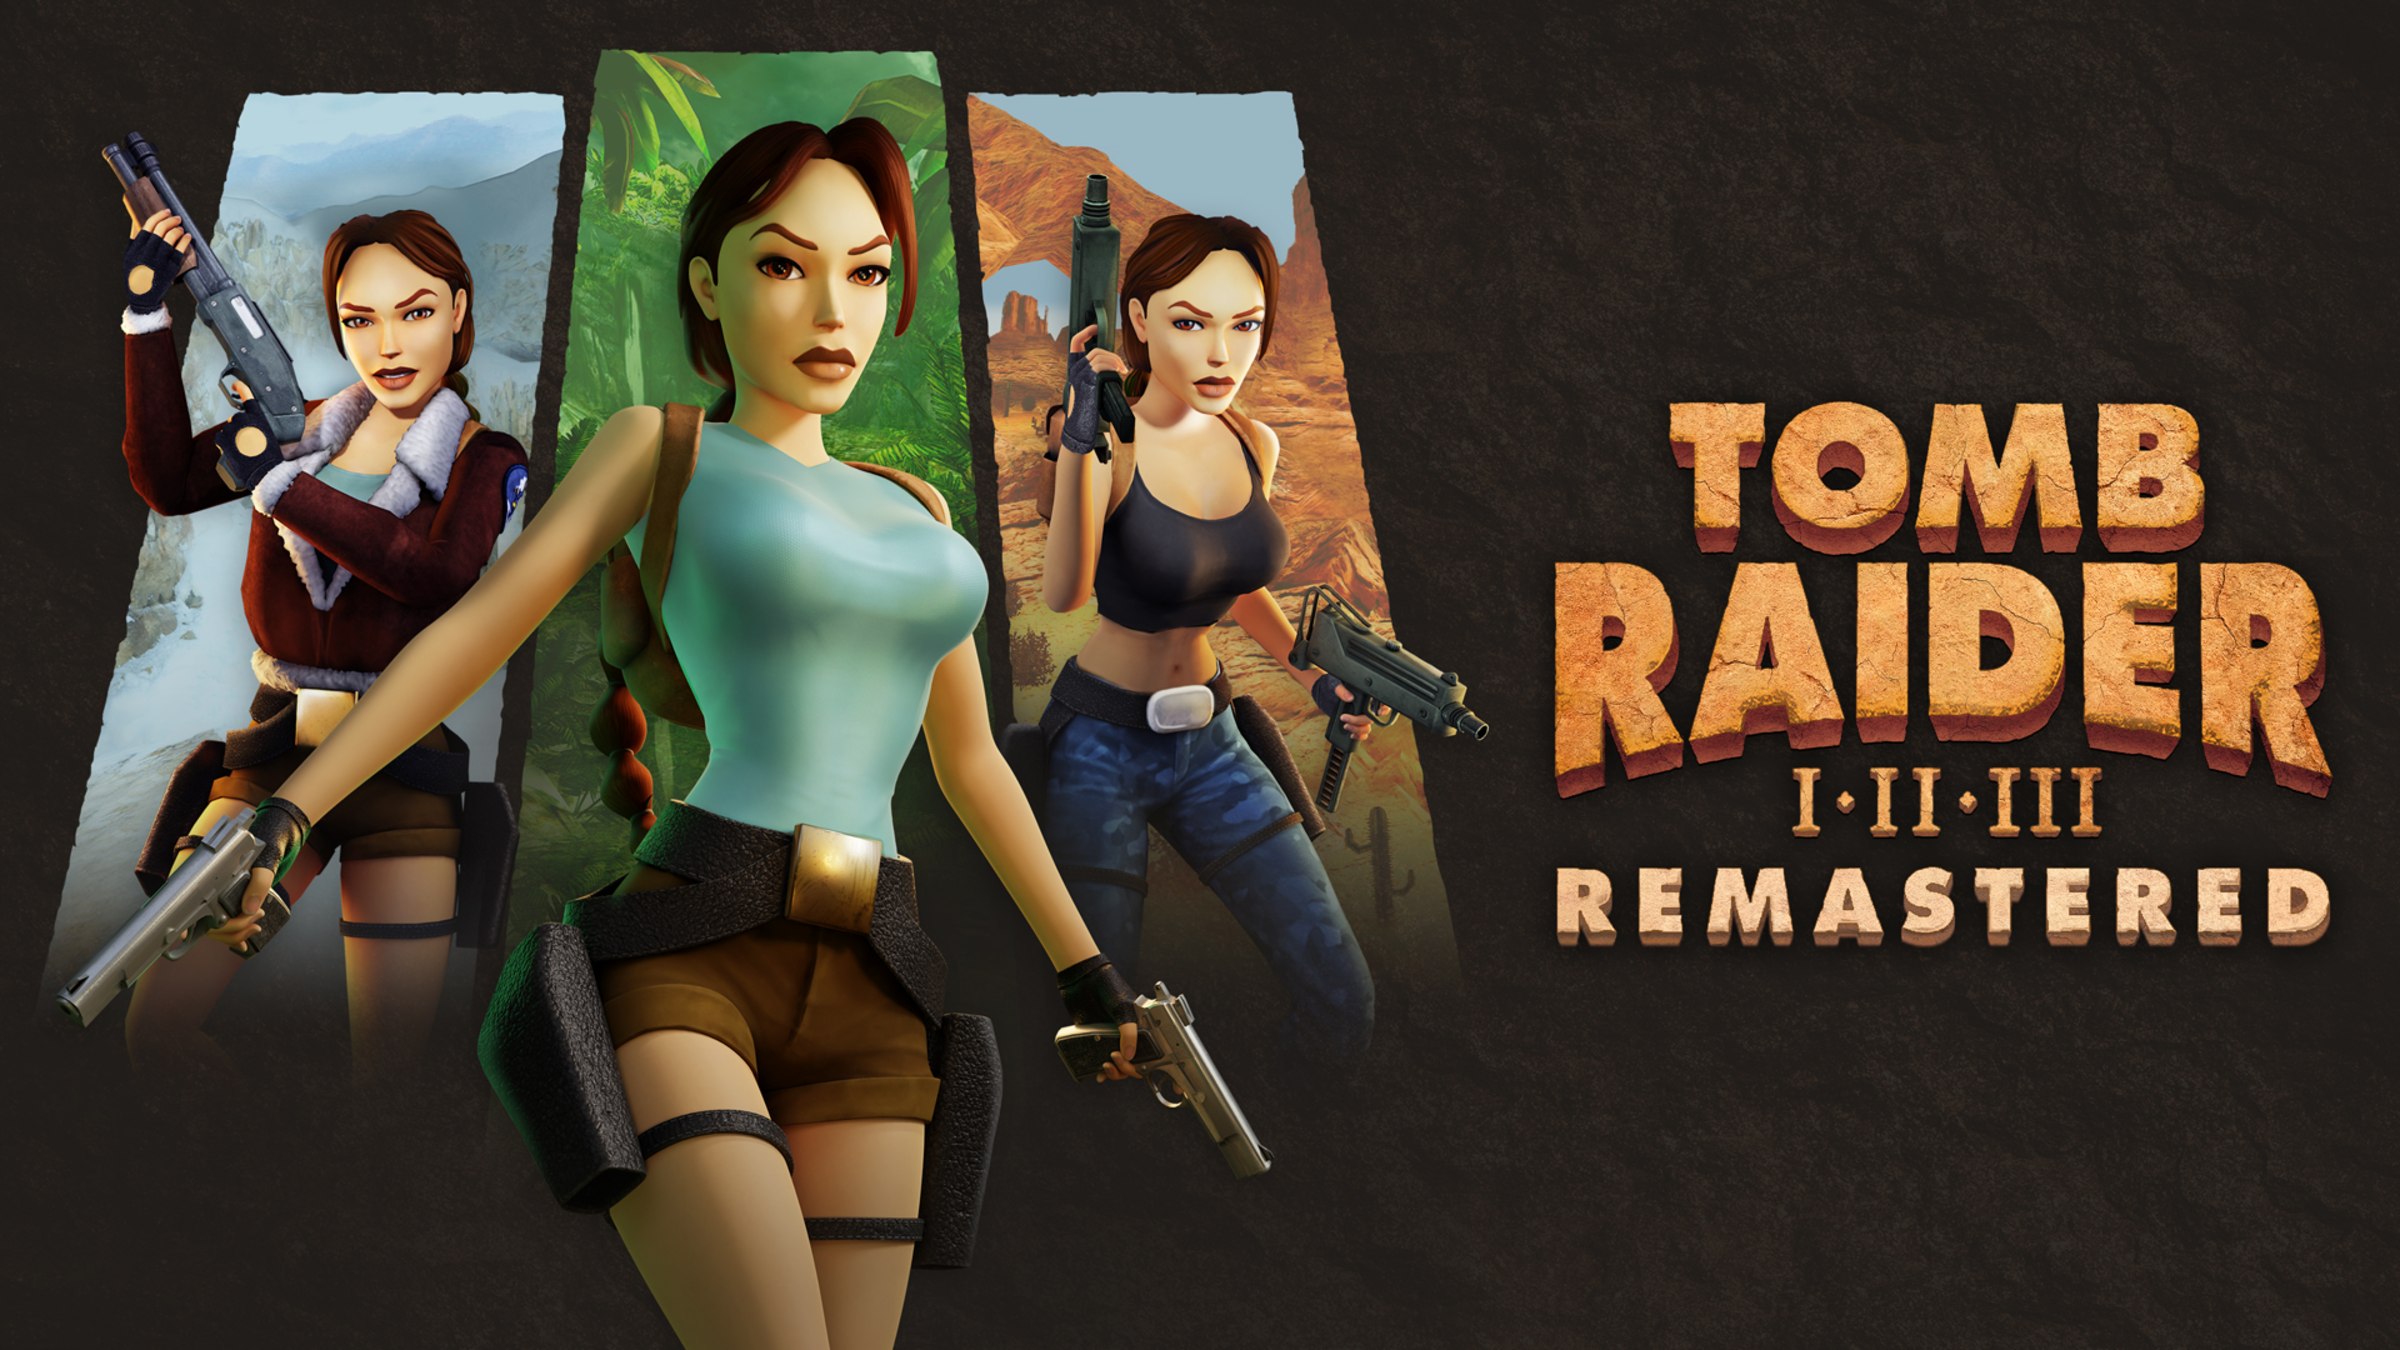 Tomb Raider IIII Remastered Starring Lara Croft for Nintendo Switch